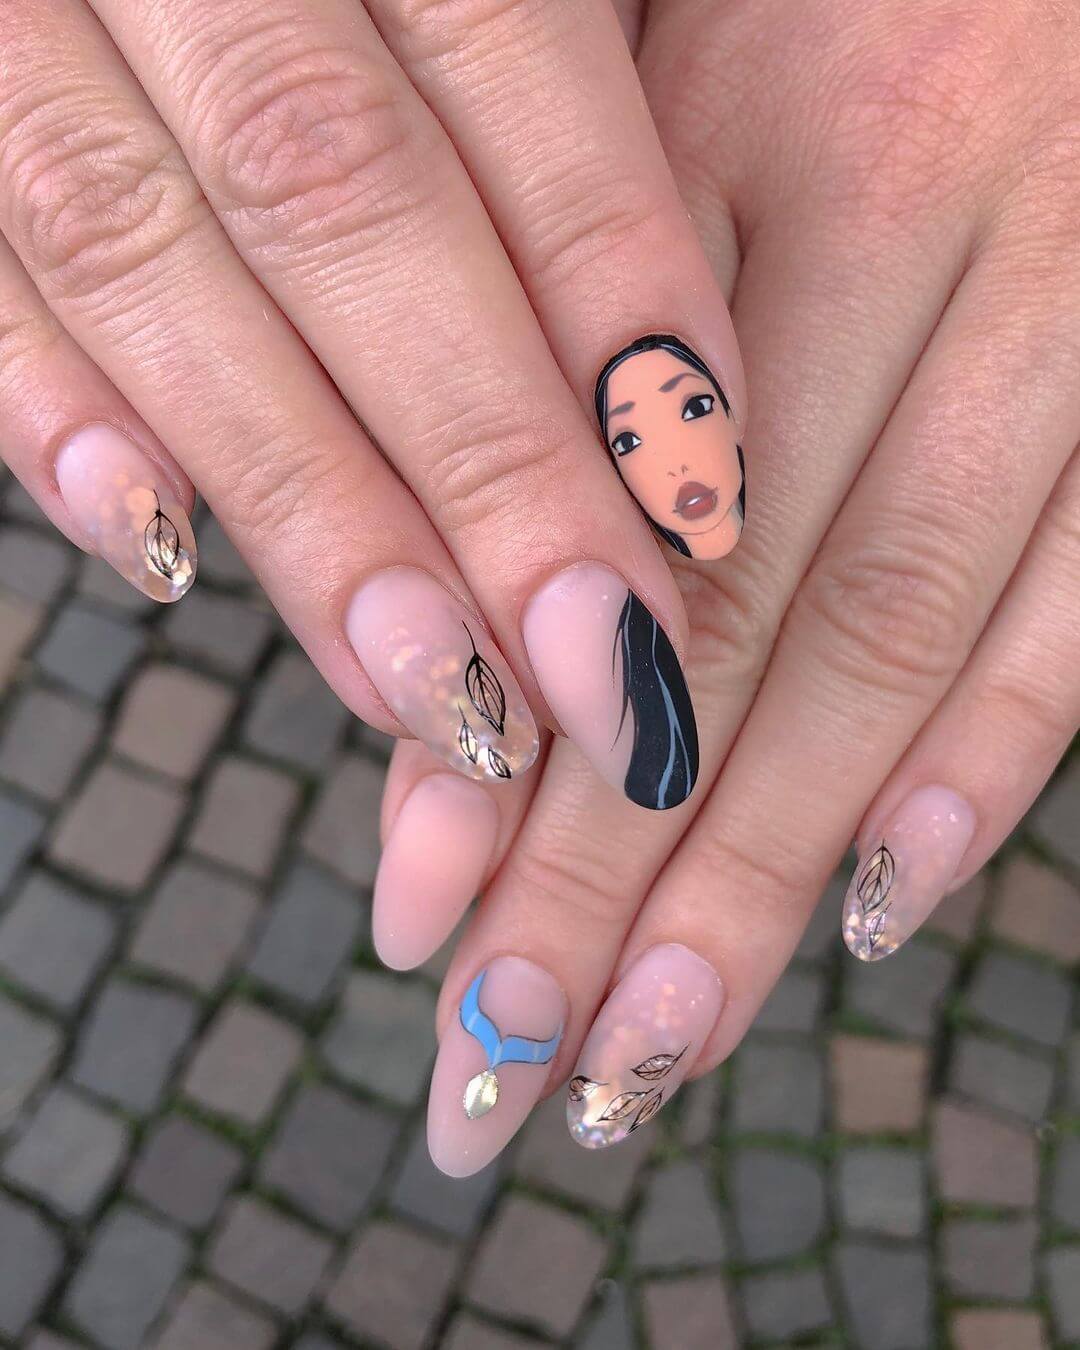 Disney Nail Art Designs Disney's Pocahontas inspired design on nails